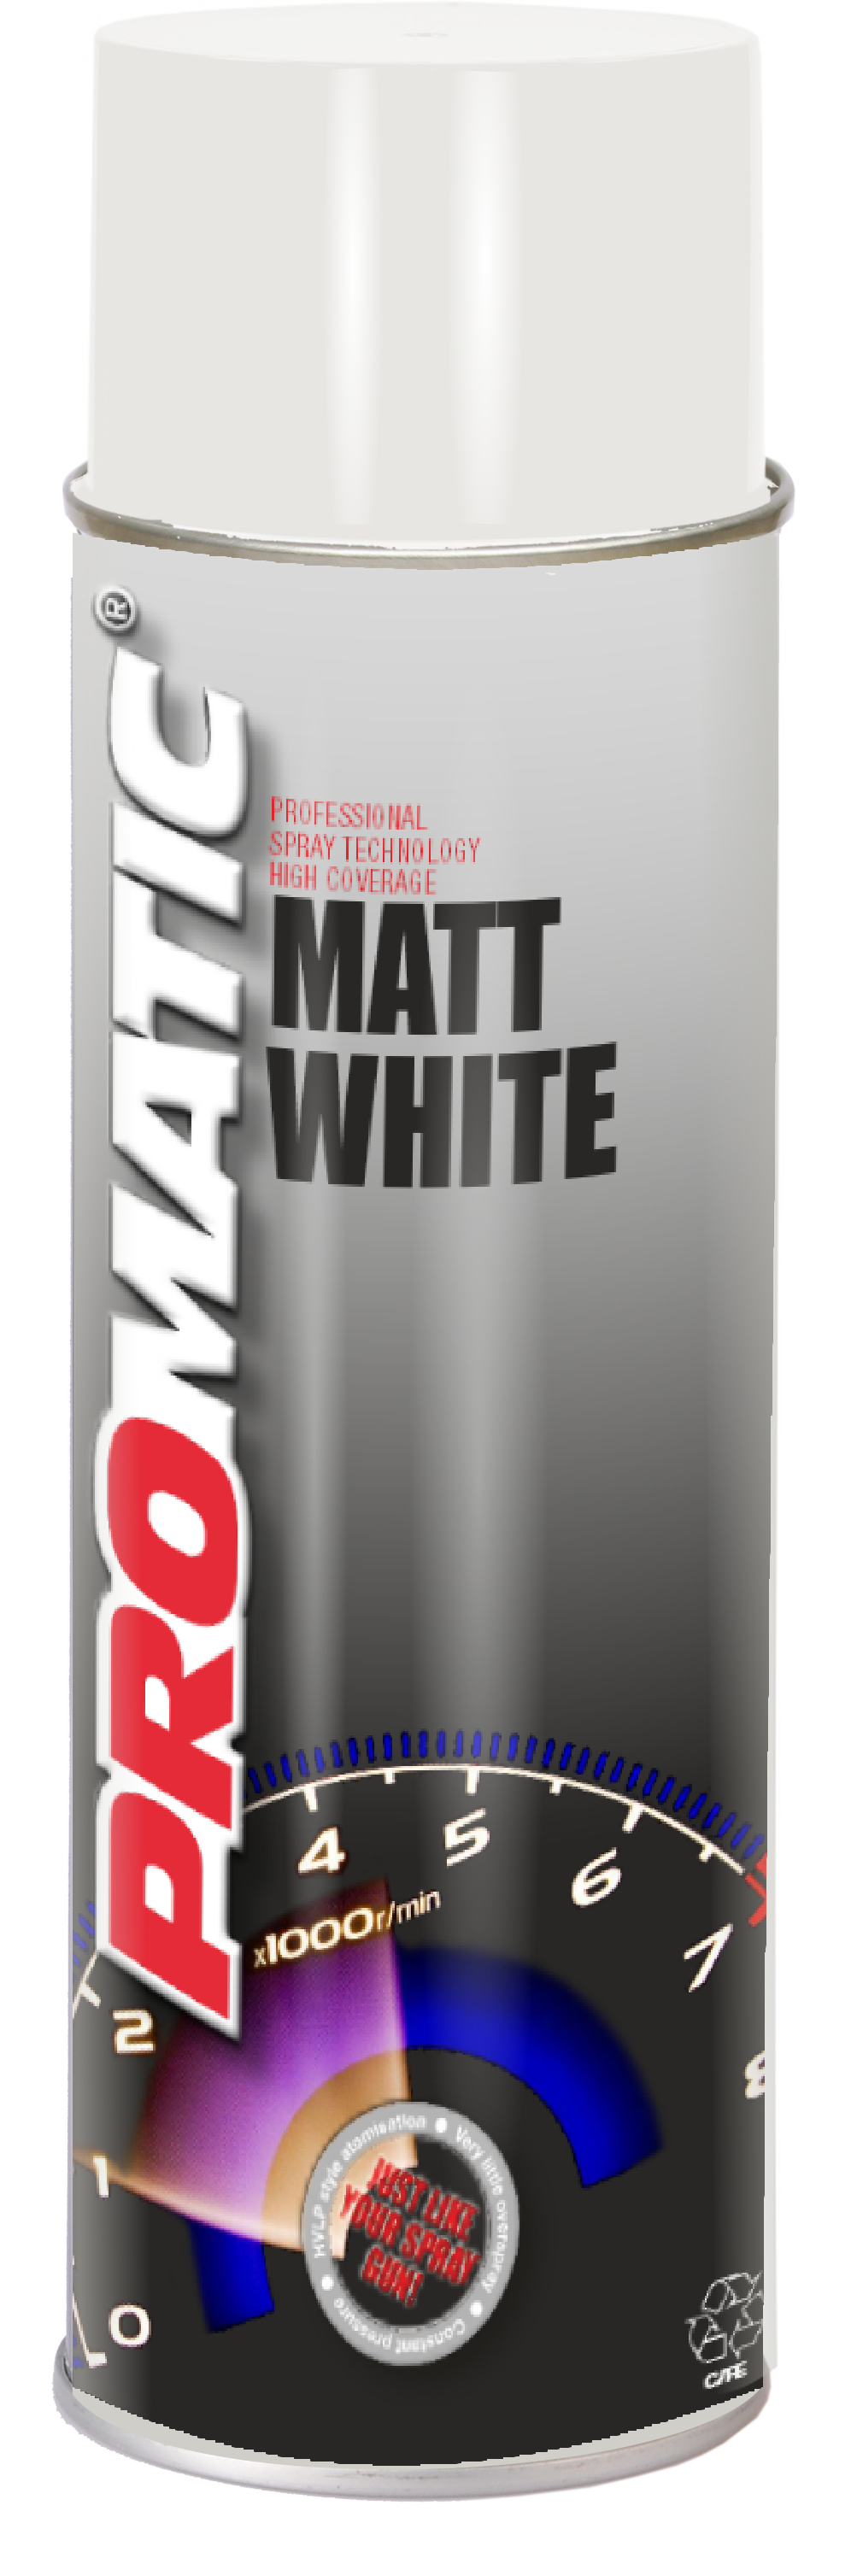 Matt White Aerosol (500ml) Product Image